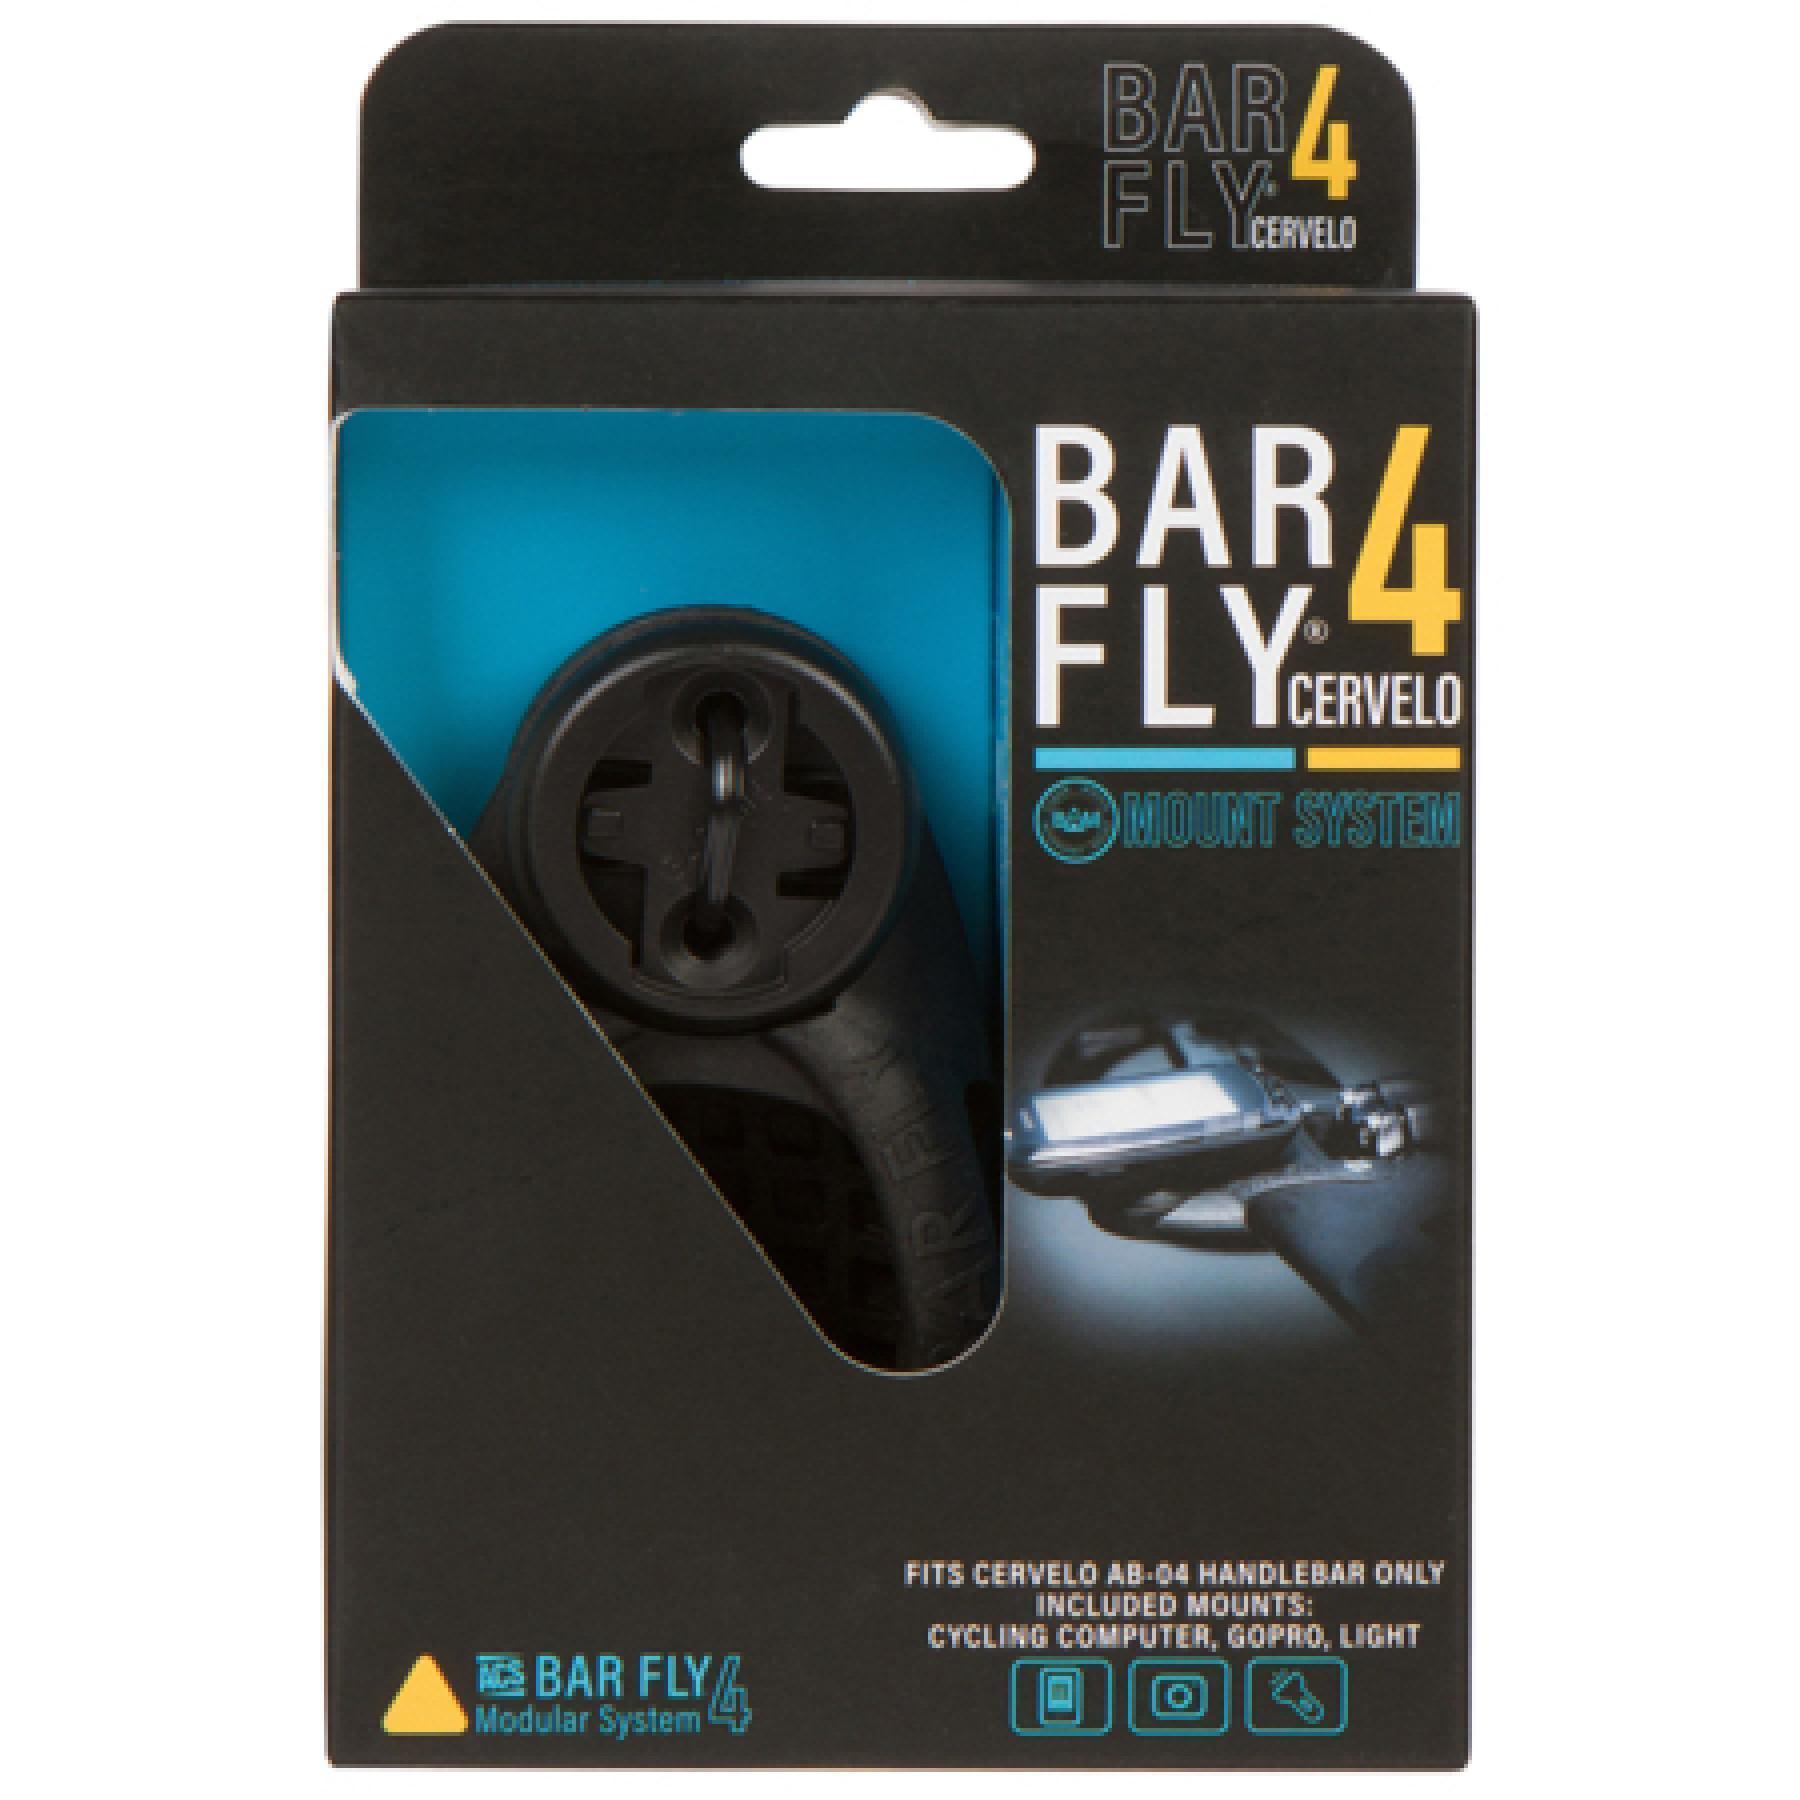 Supporto anteriore Barfly Bar Fly 4 Cervelo